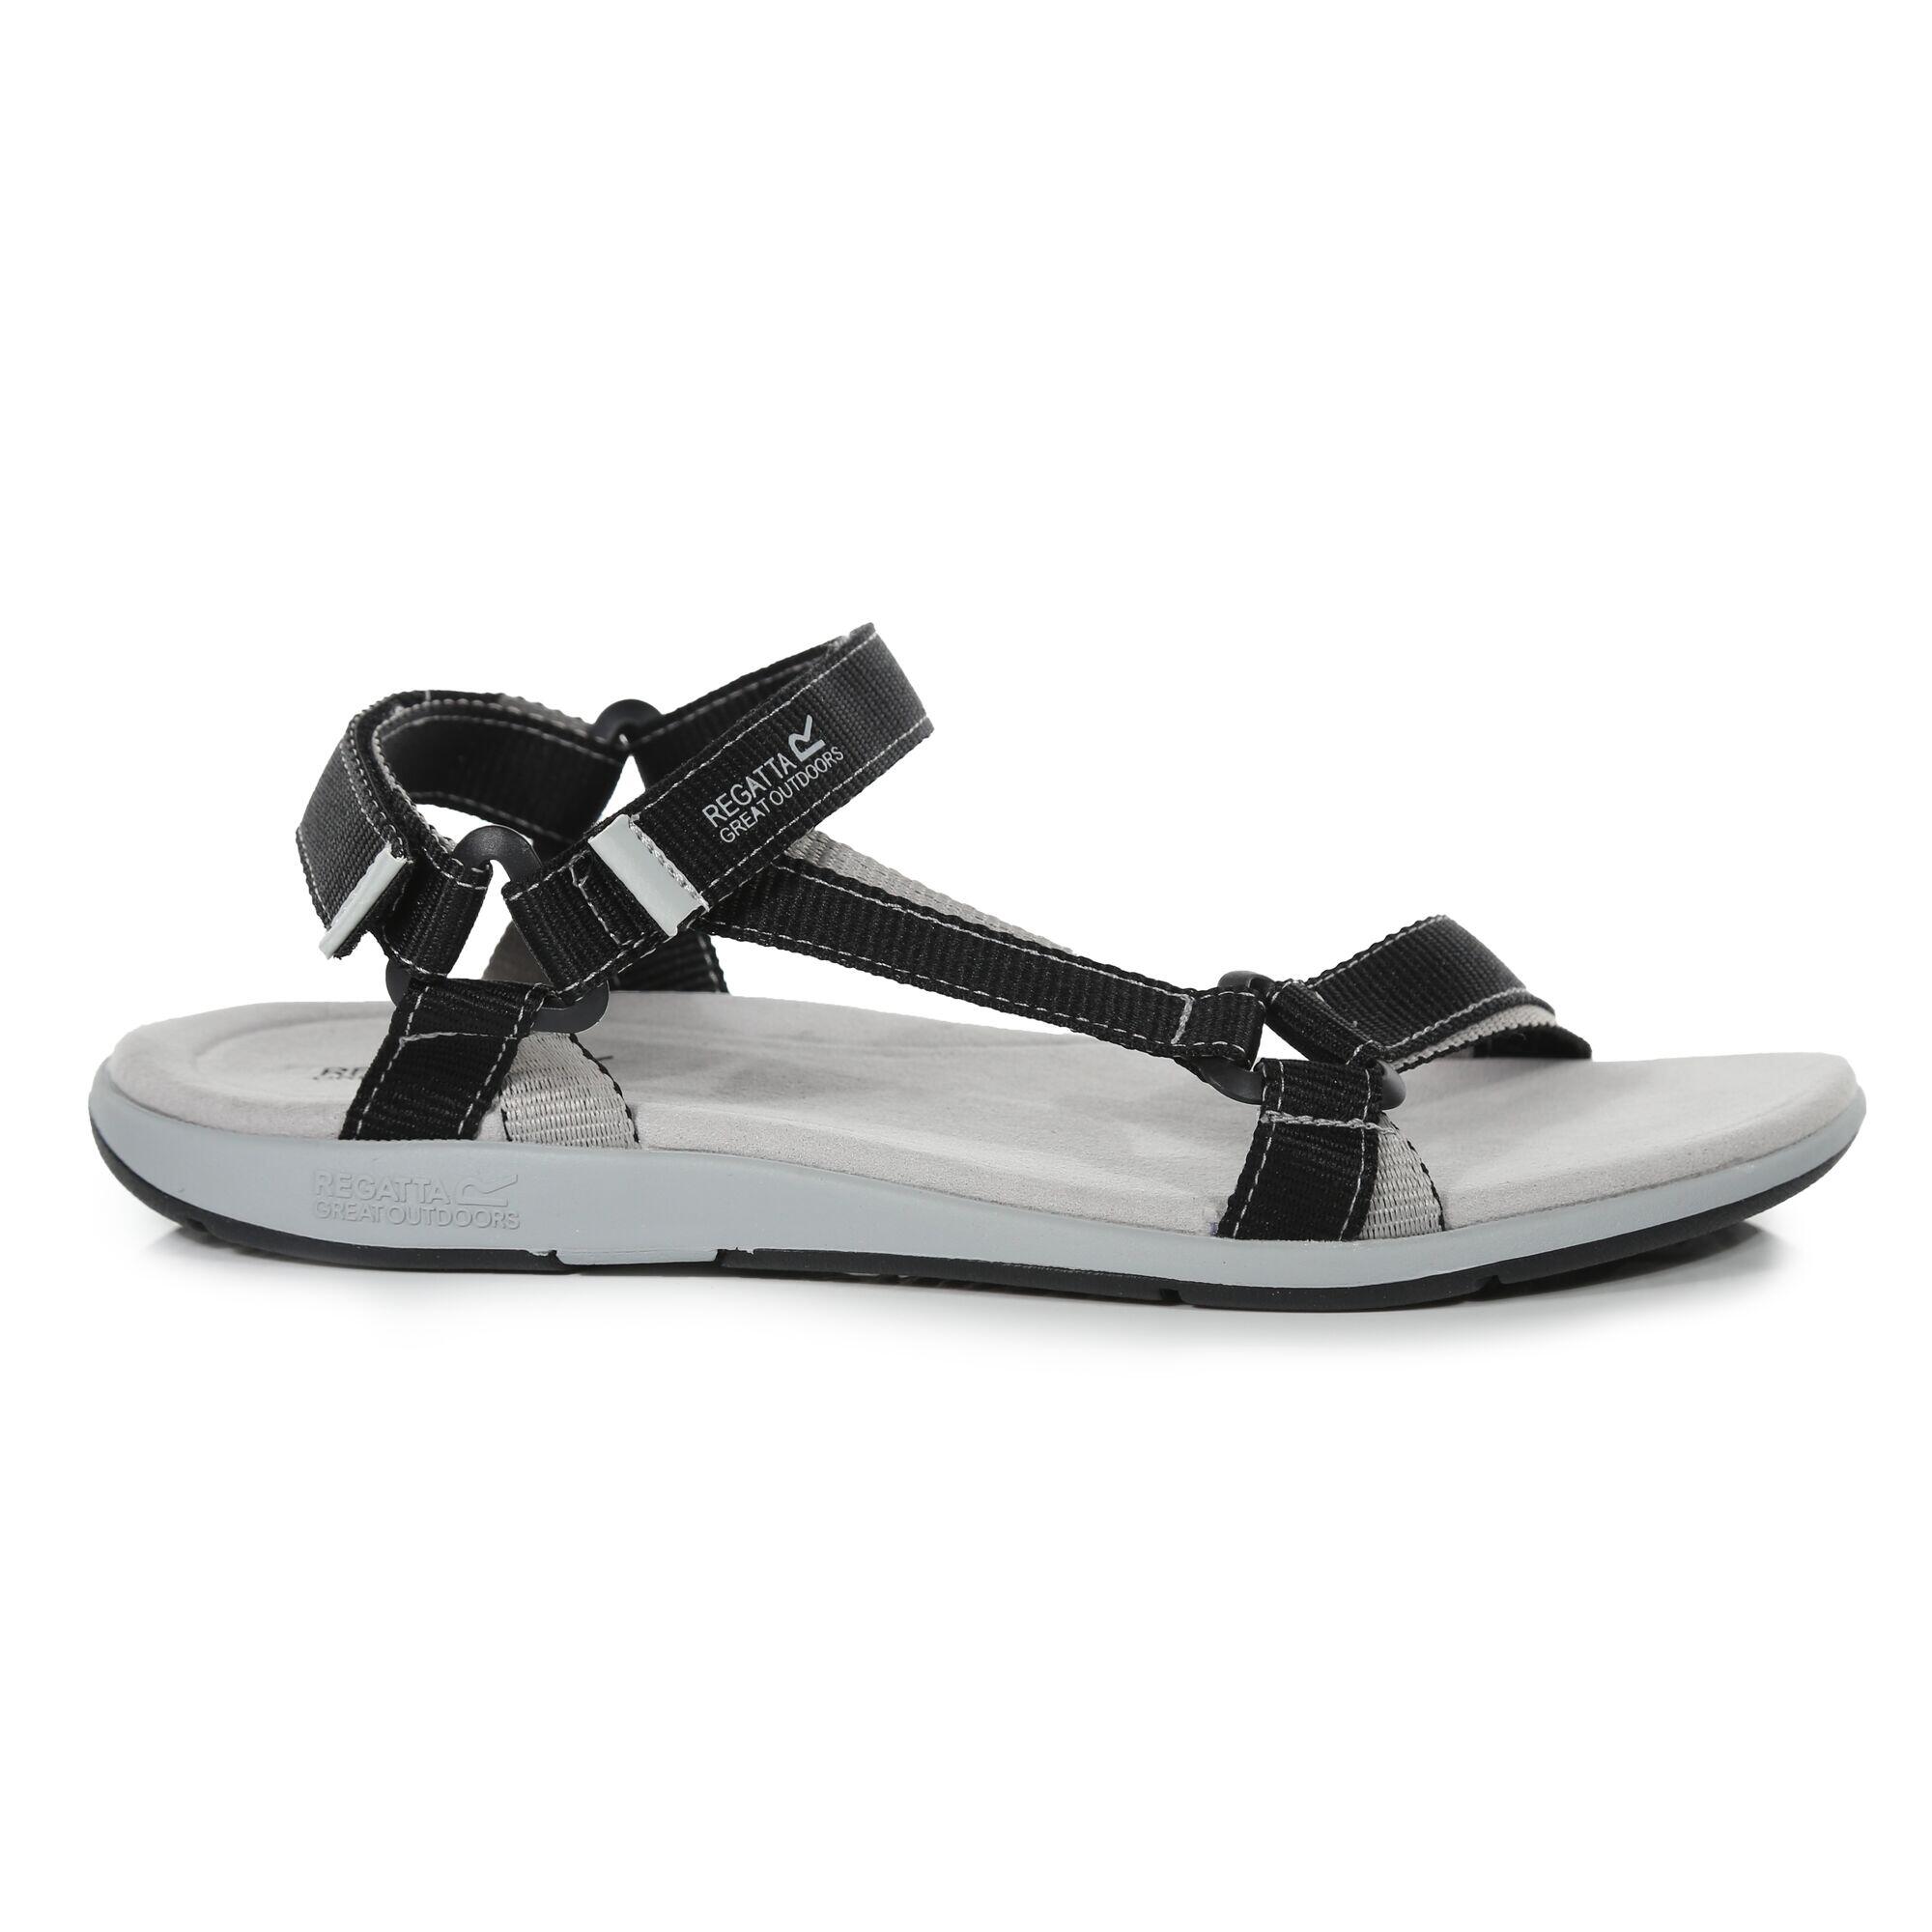 Lady Santa Sol Women's Walking Sandals - Black / Grey 2/5